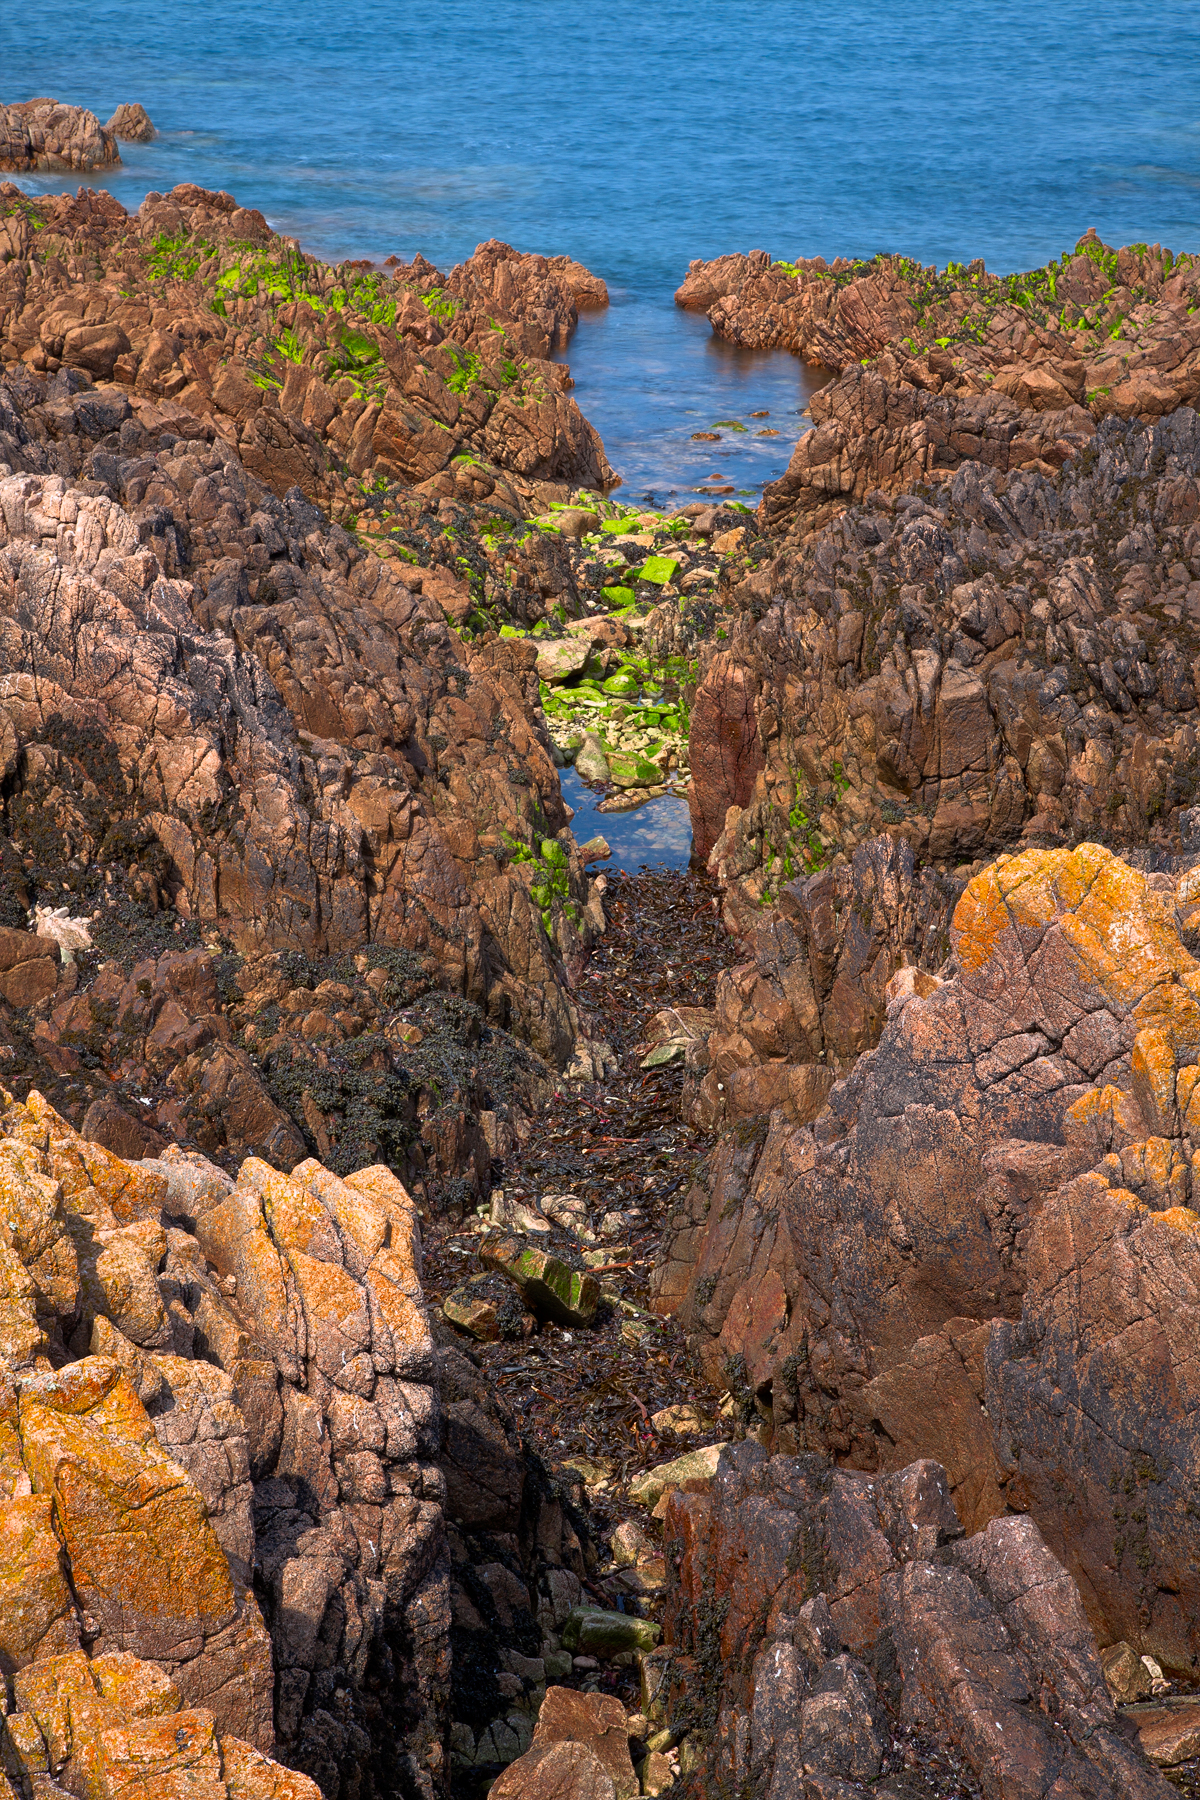 Guernsey cliffs - hdr photo